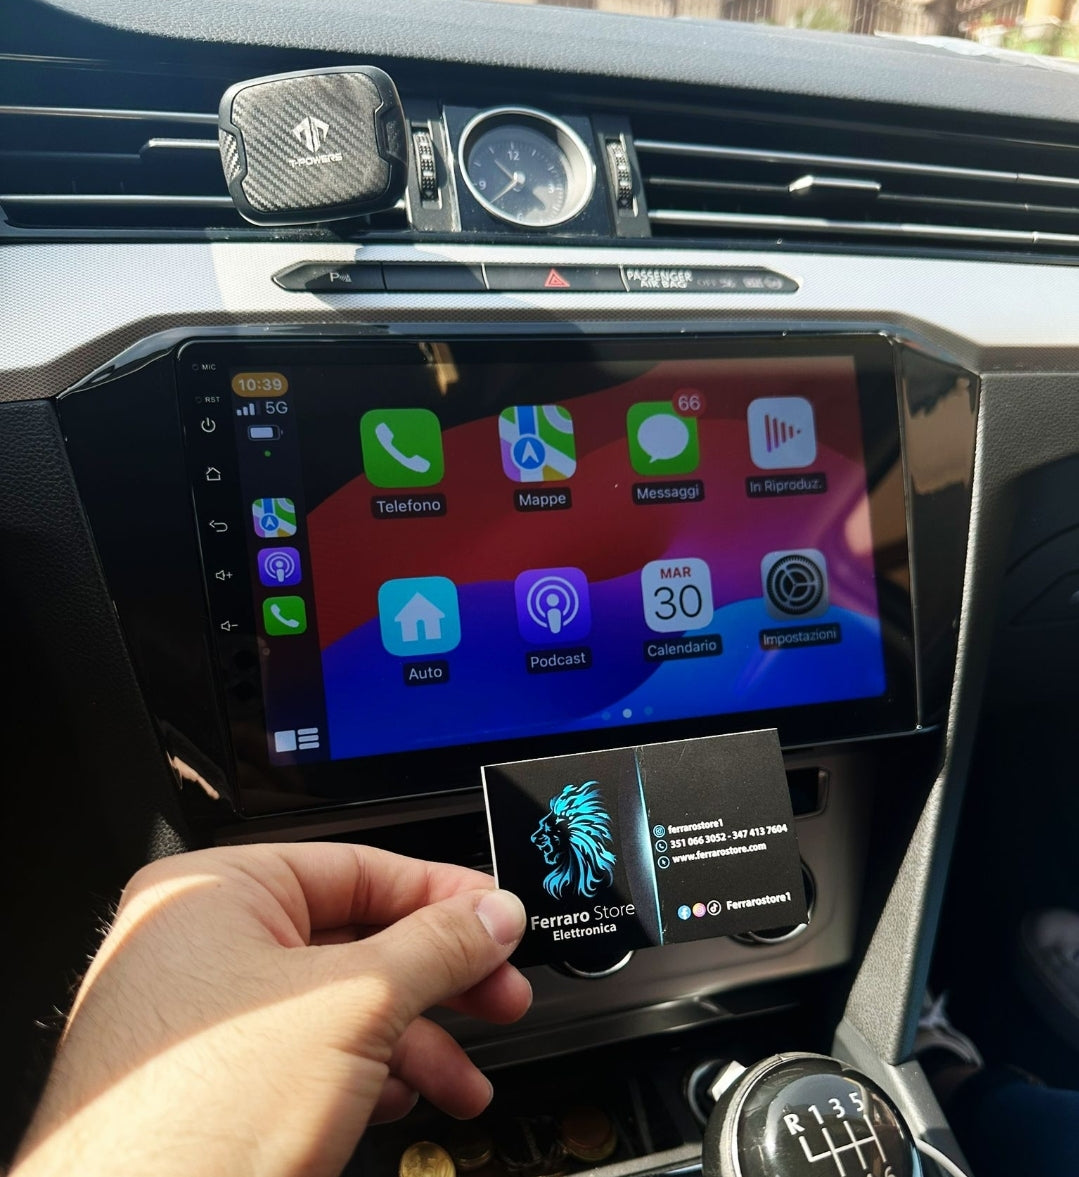 Autoradio per PASSAT B8 [2015 - 2020] - Sistema auto Intelligente, 2Din 10.1"Pollici, GPS, Navigatore, Wifi